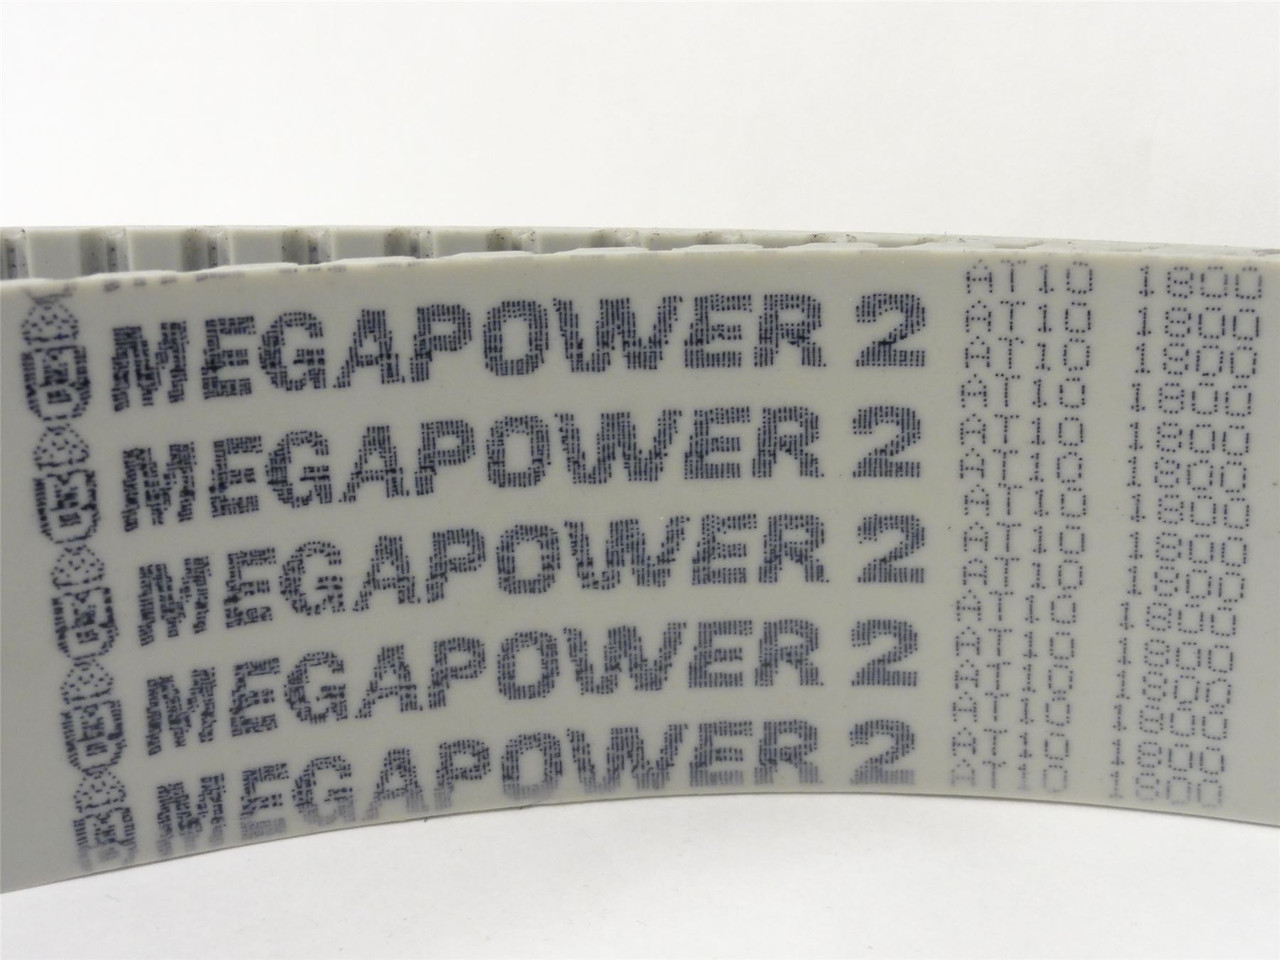 Megadyne AT10-1800-50; Timing Belt; 10mm Pitch; 50mm Width